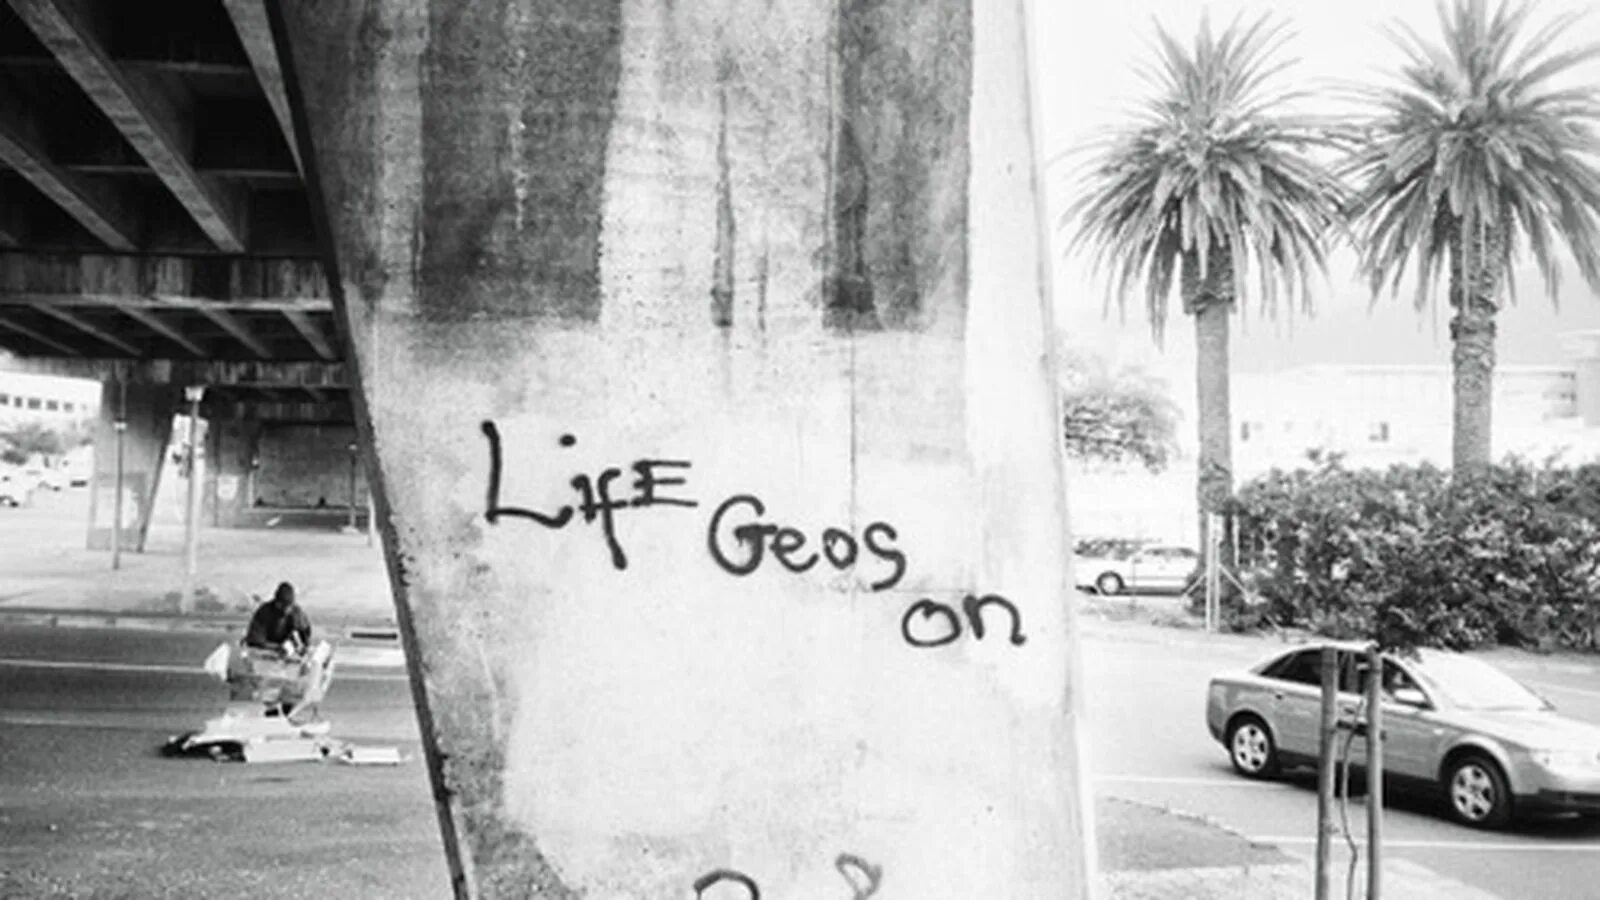 Life goes на русском. Life goes on. Life goes on картинка. Life goes on обои на телефон. Life goes on надпись.